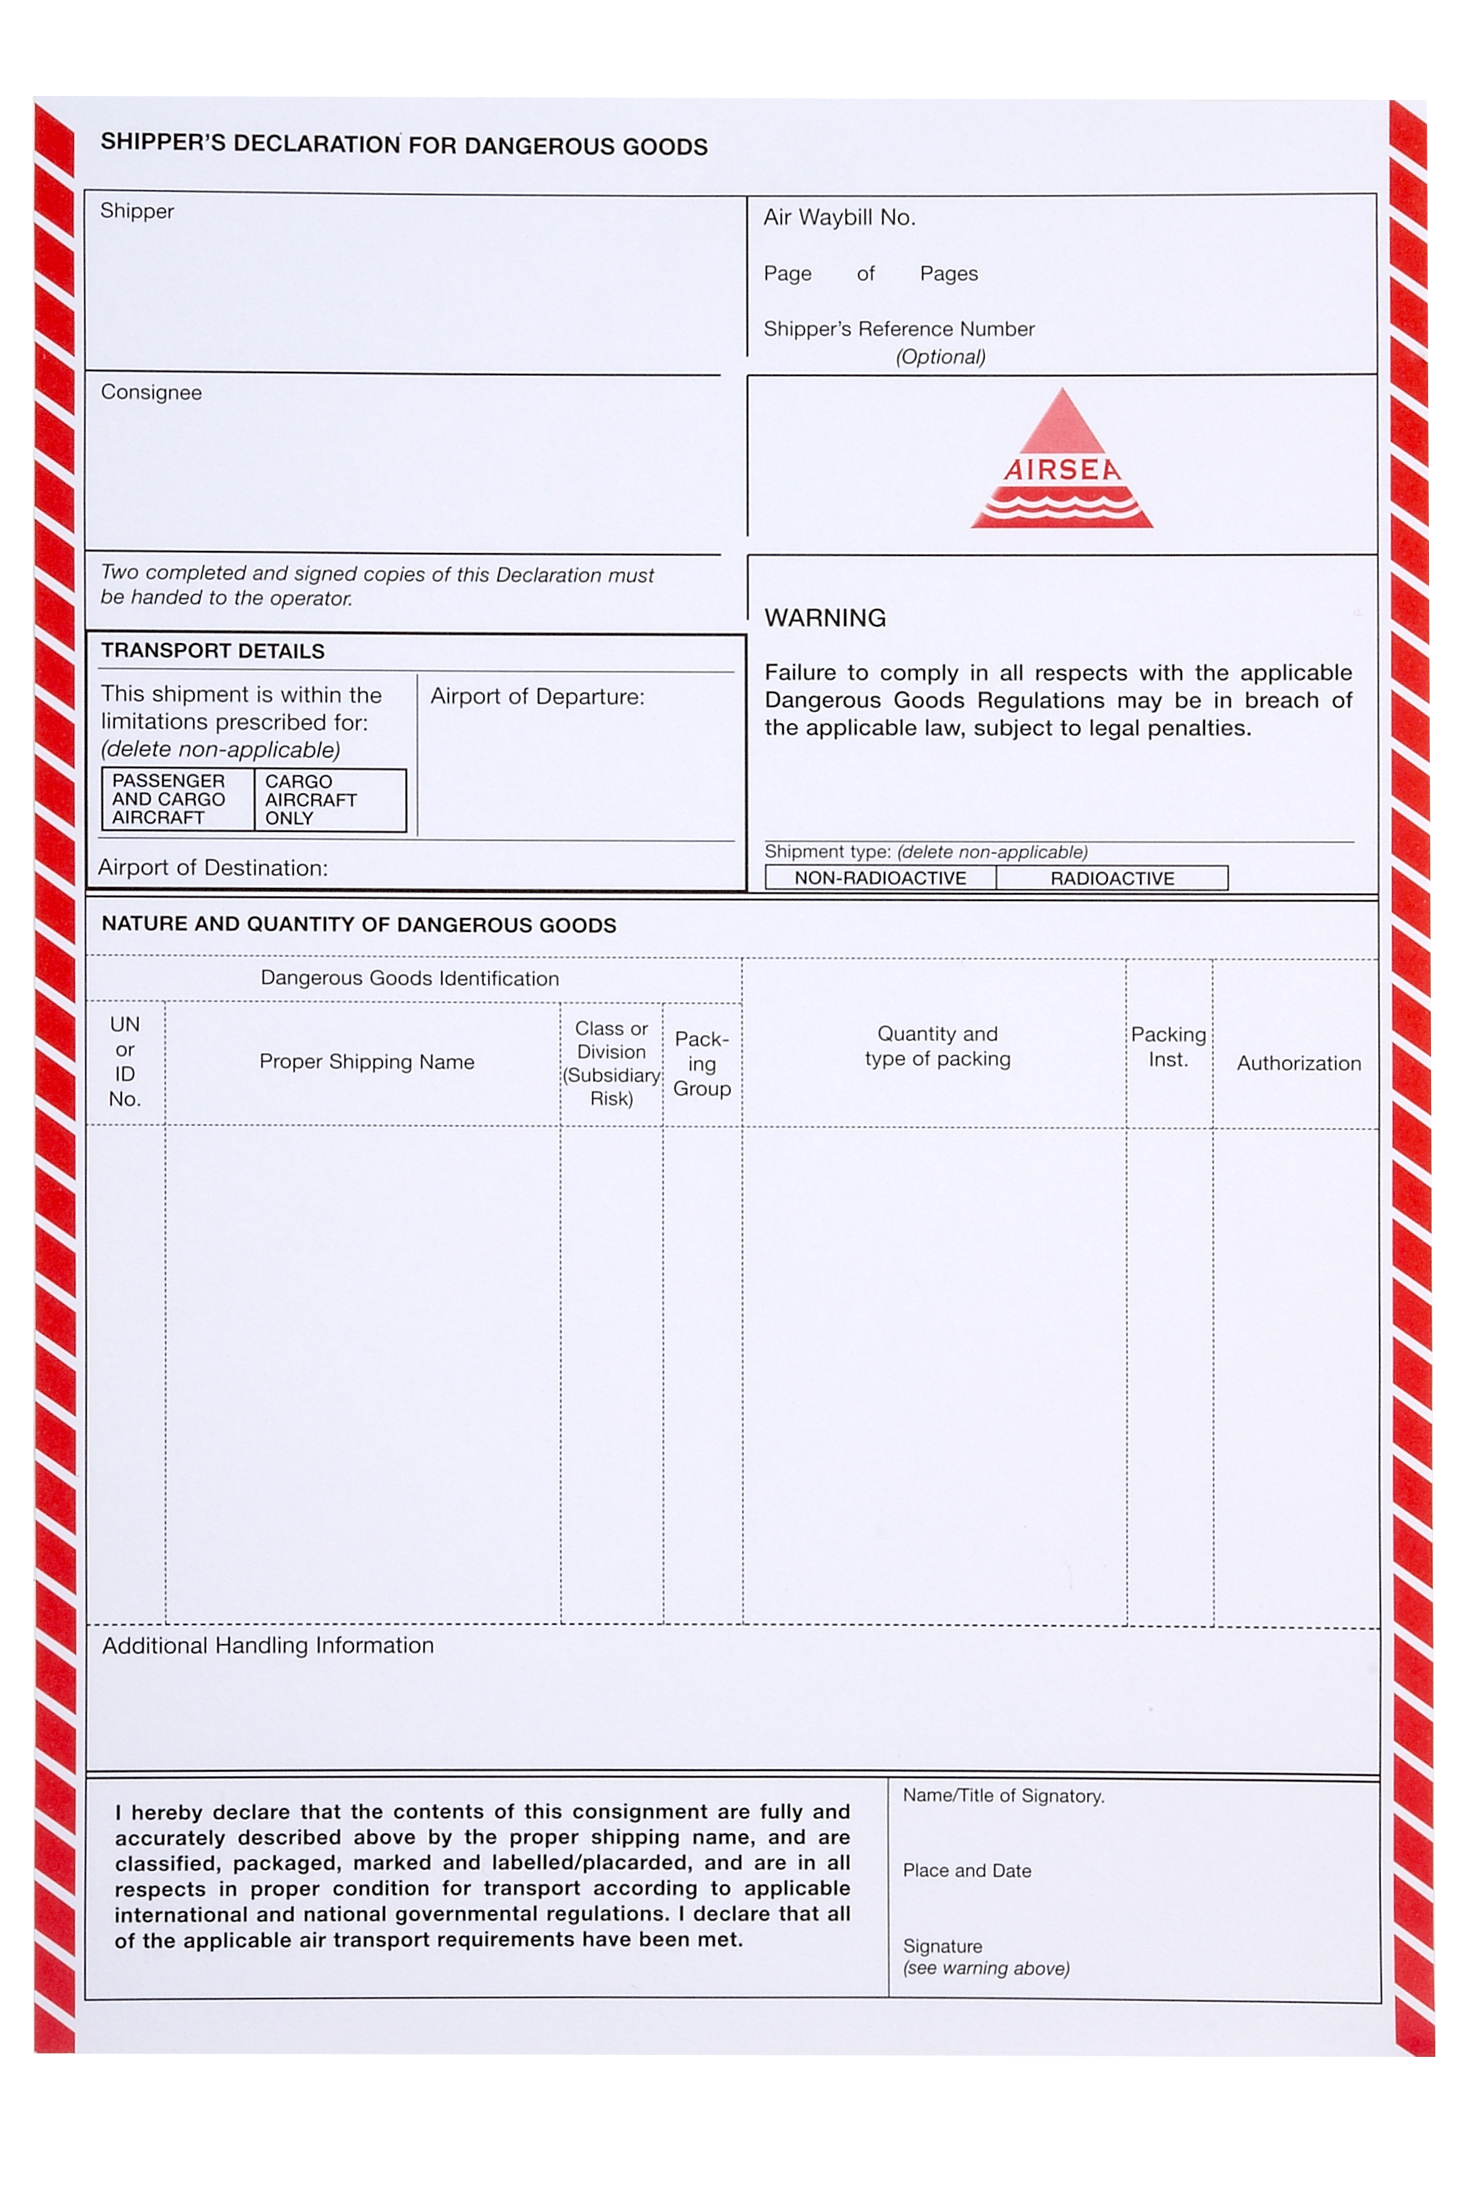 Exhibit 326, Shipper's Declaration for Dangerous Goods (Sample Form)